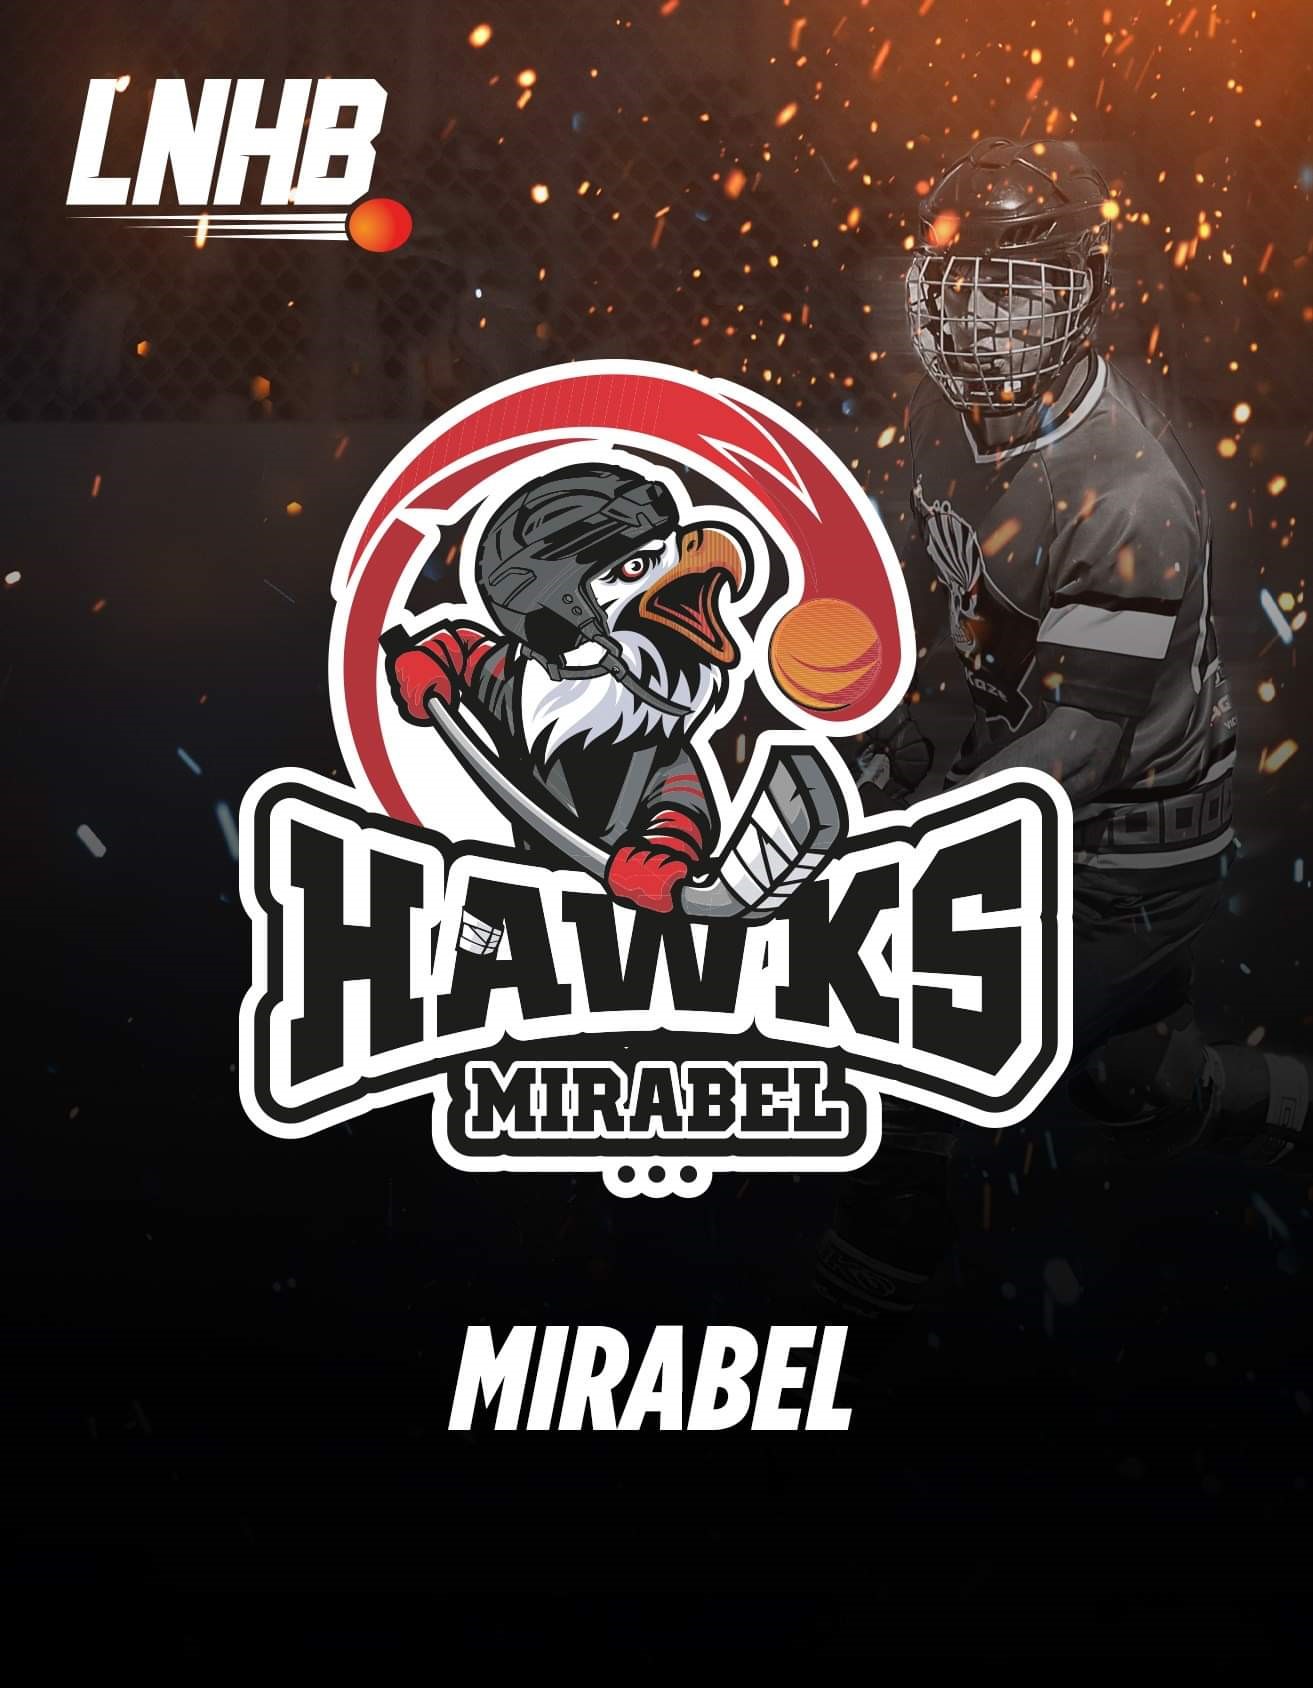 Logo Mirabel Lnhb